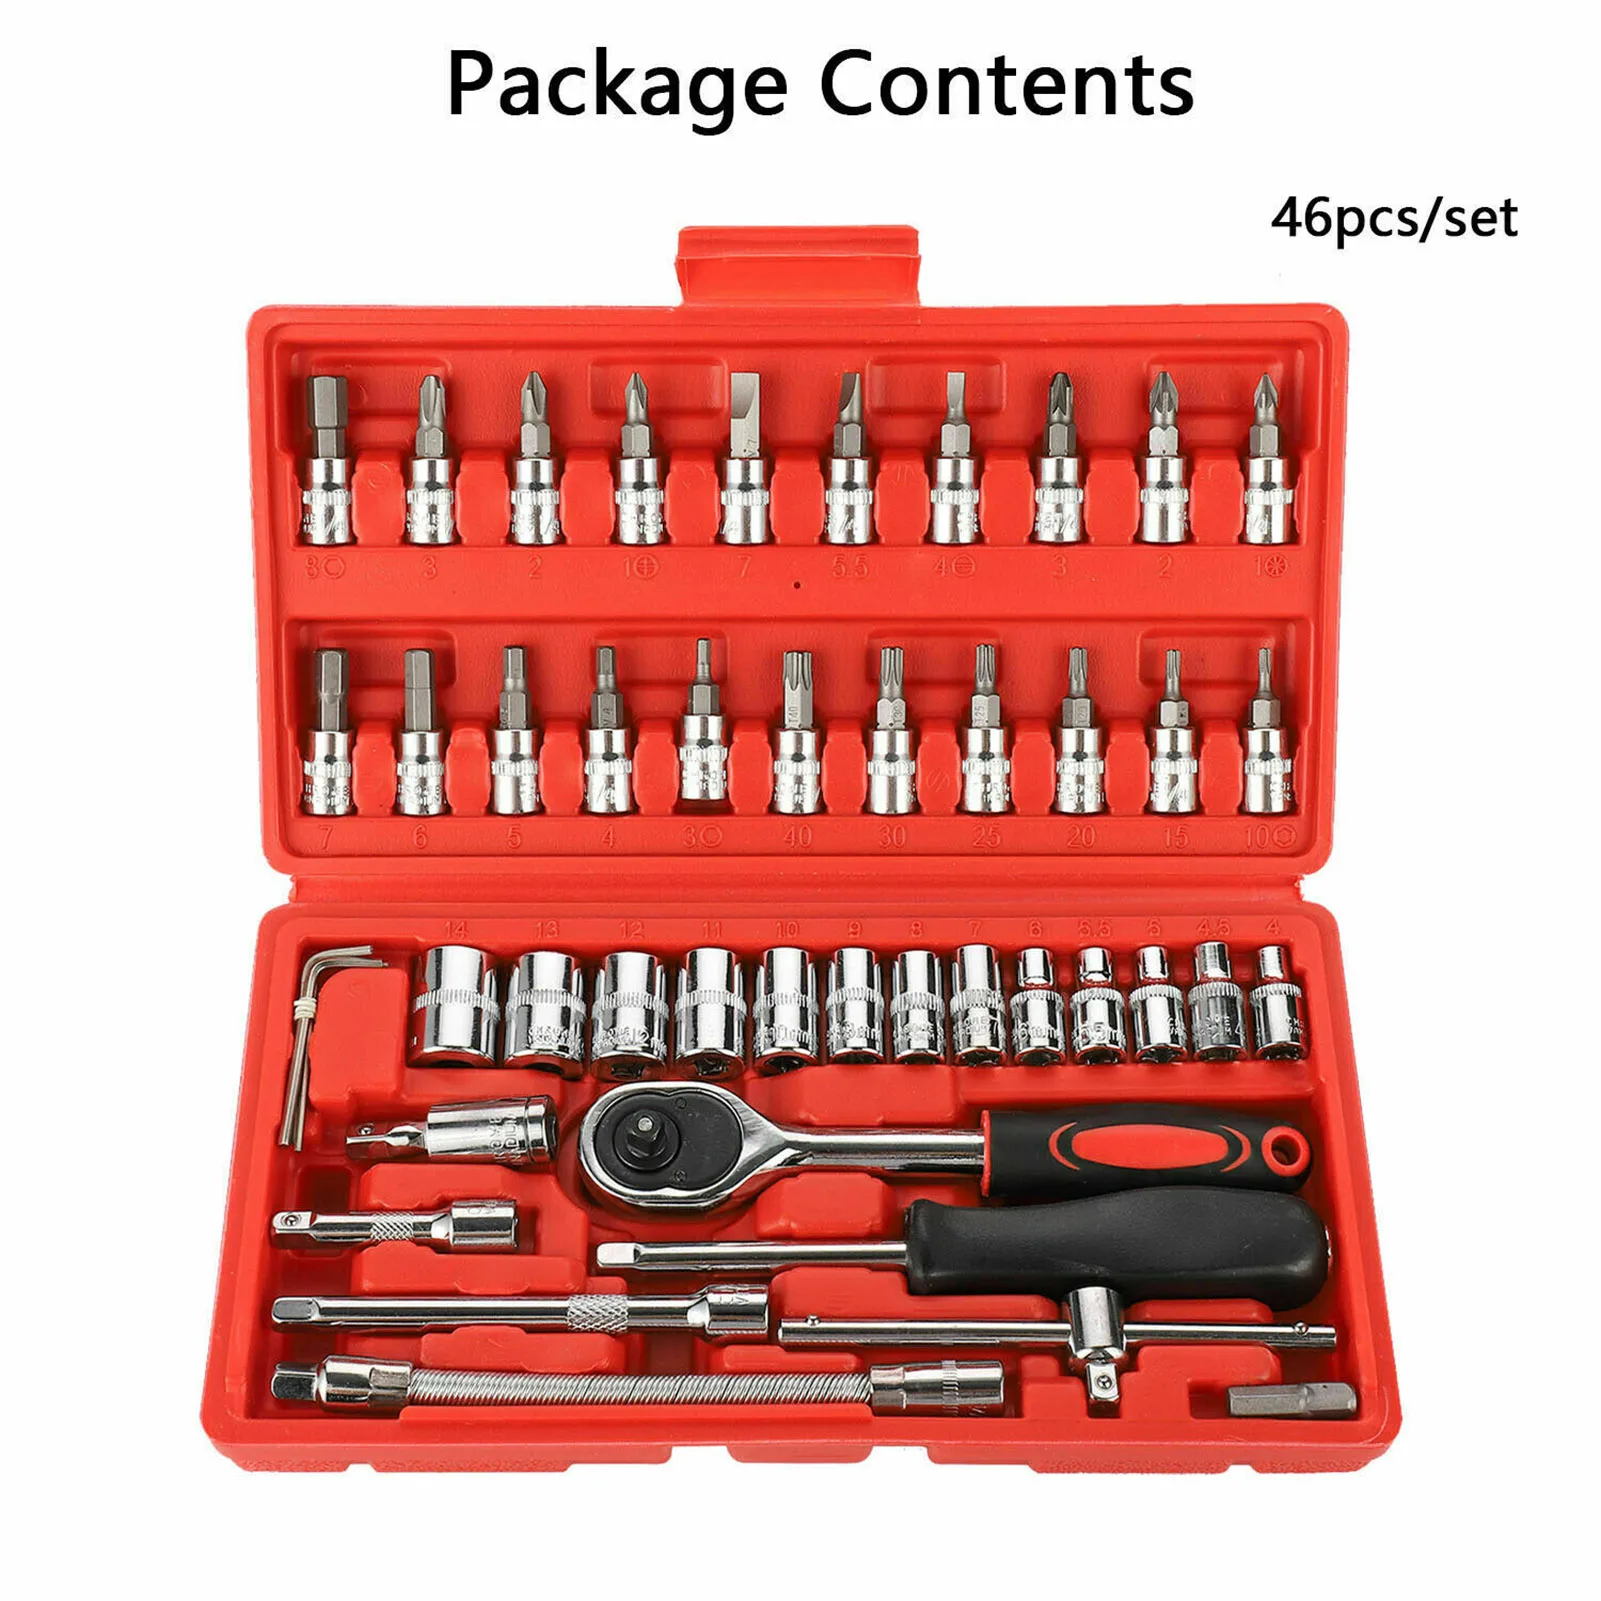 

KKMOON 46Pcs Ratchet Wrench Socket Tools Set Metric 1/4'' Drive Screwdriver with Box